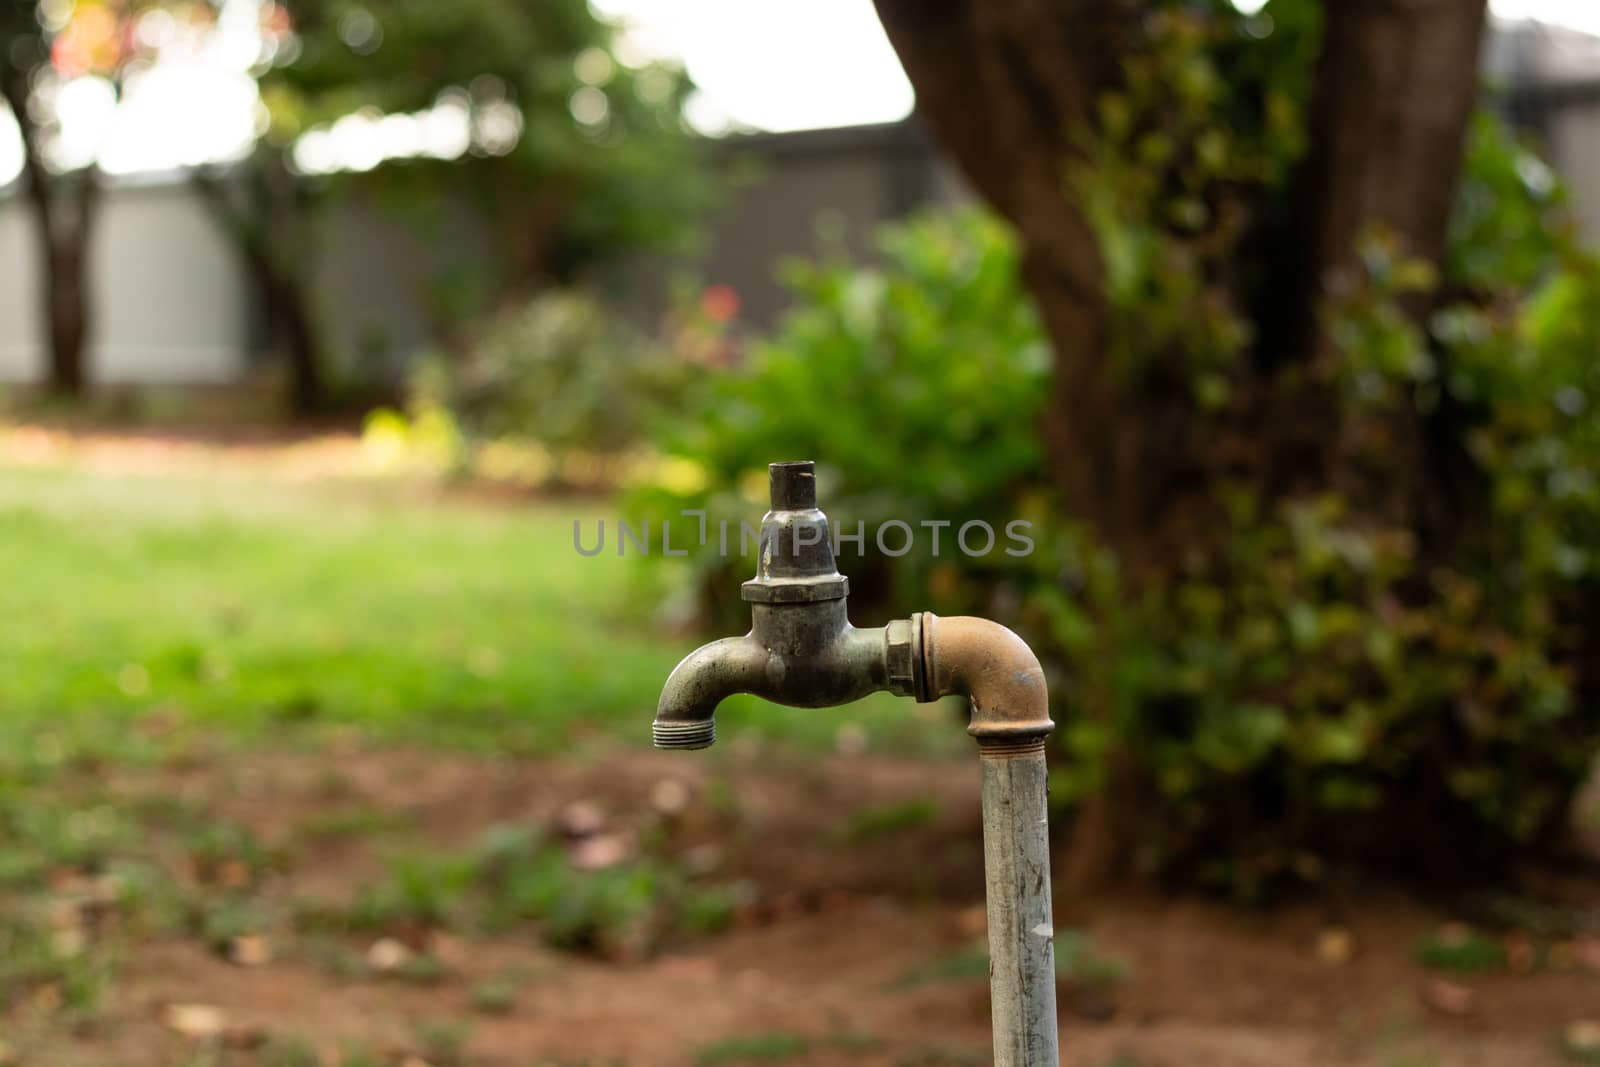 Broken water tap by phathisile